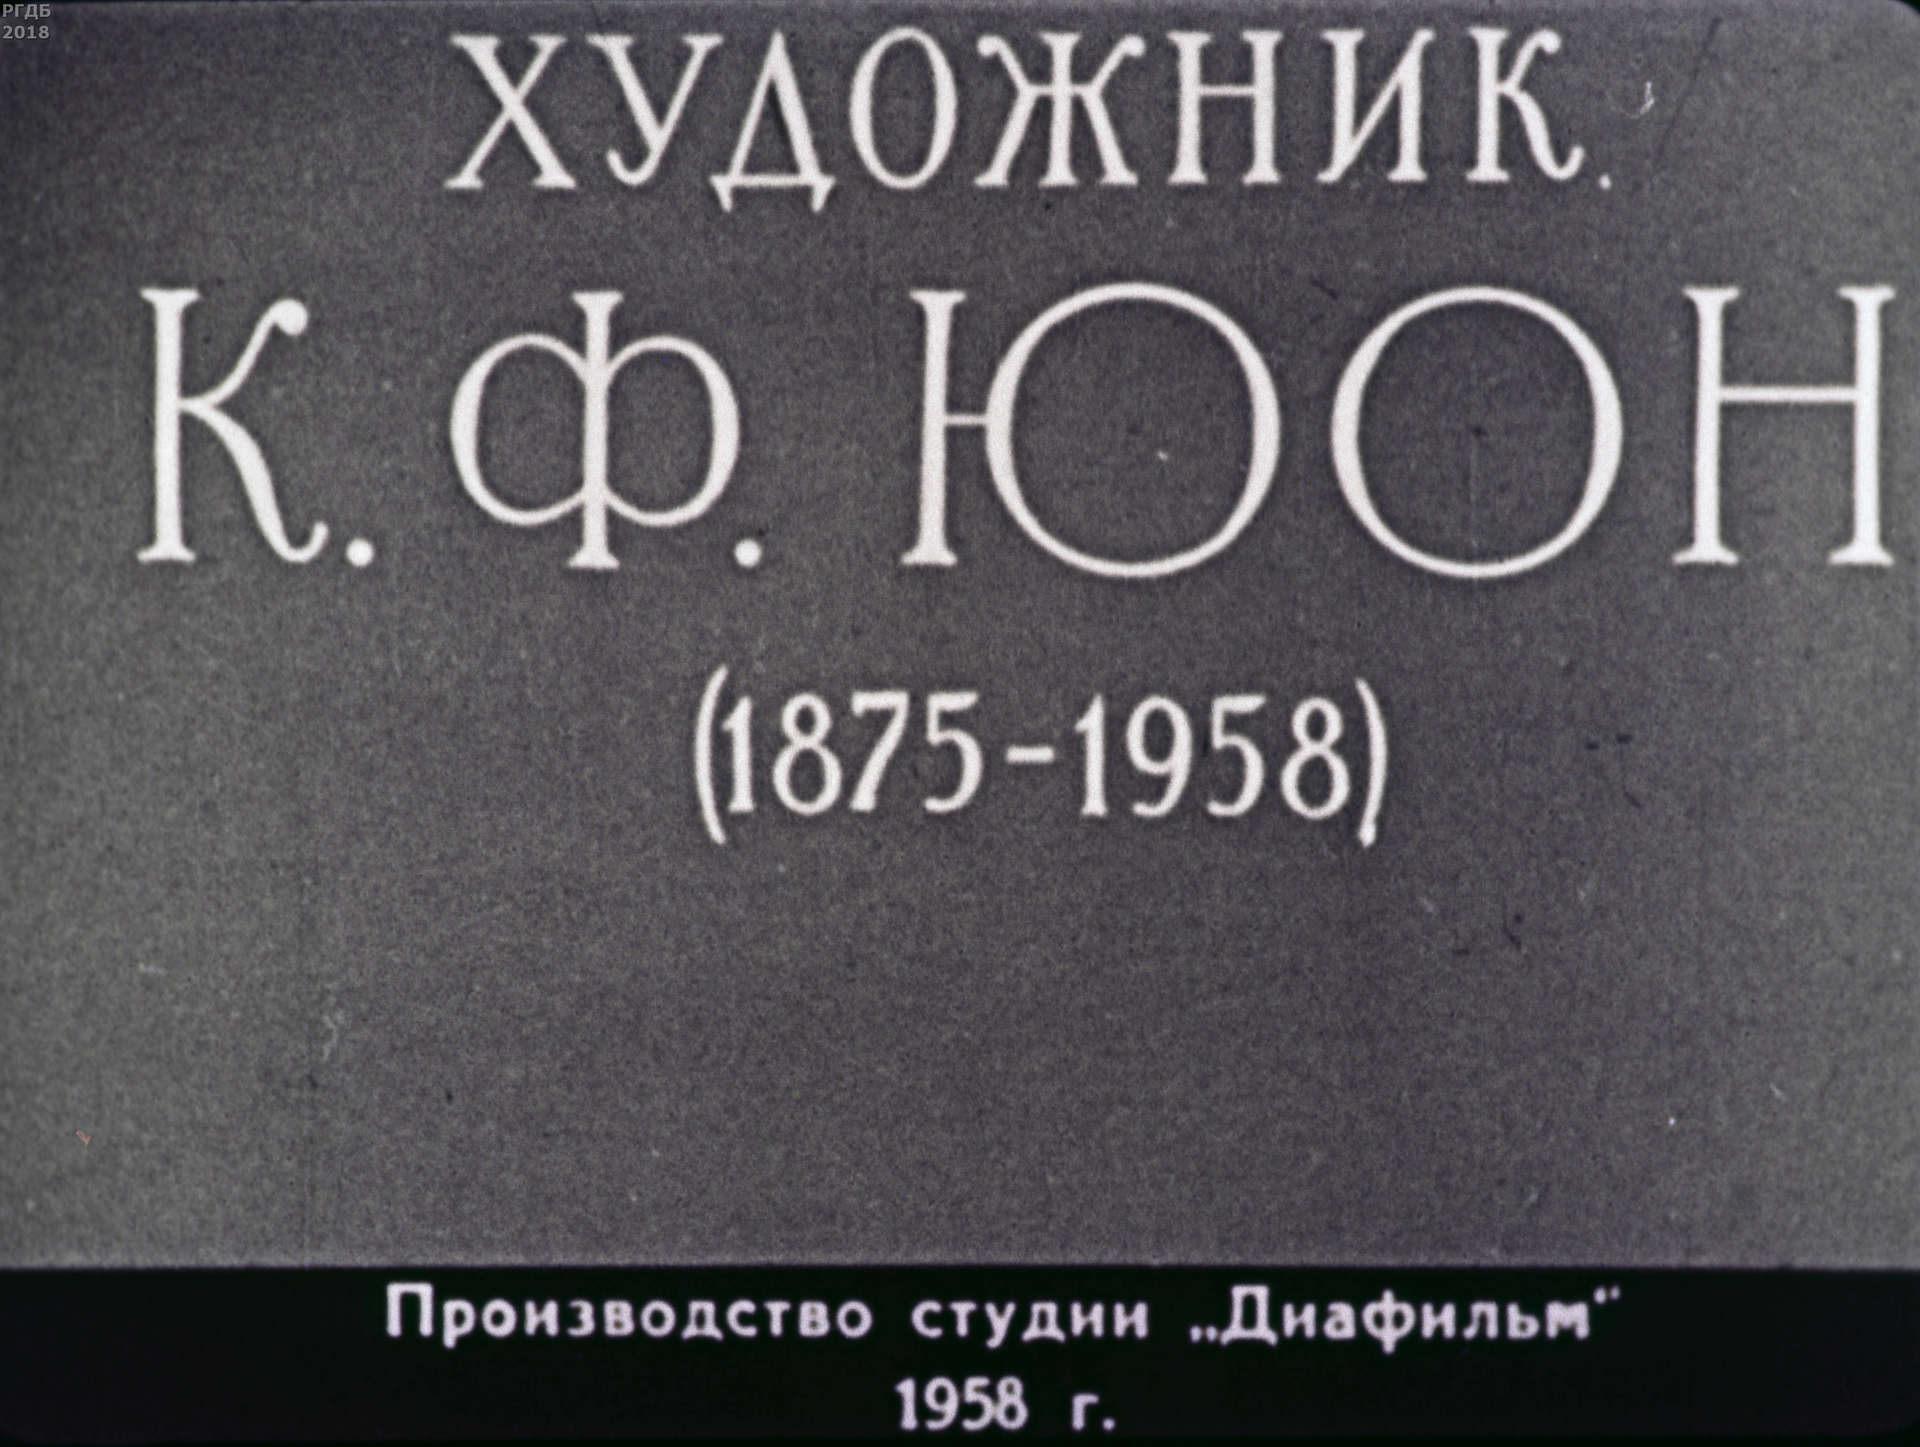 Художник К. Ф. Юон. 1875-1958 гг.